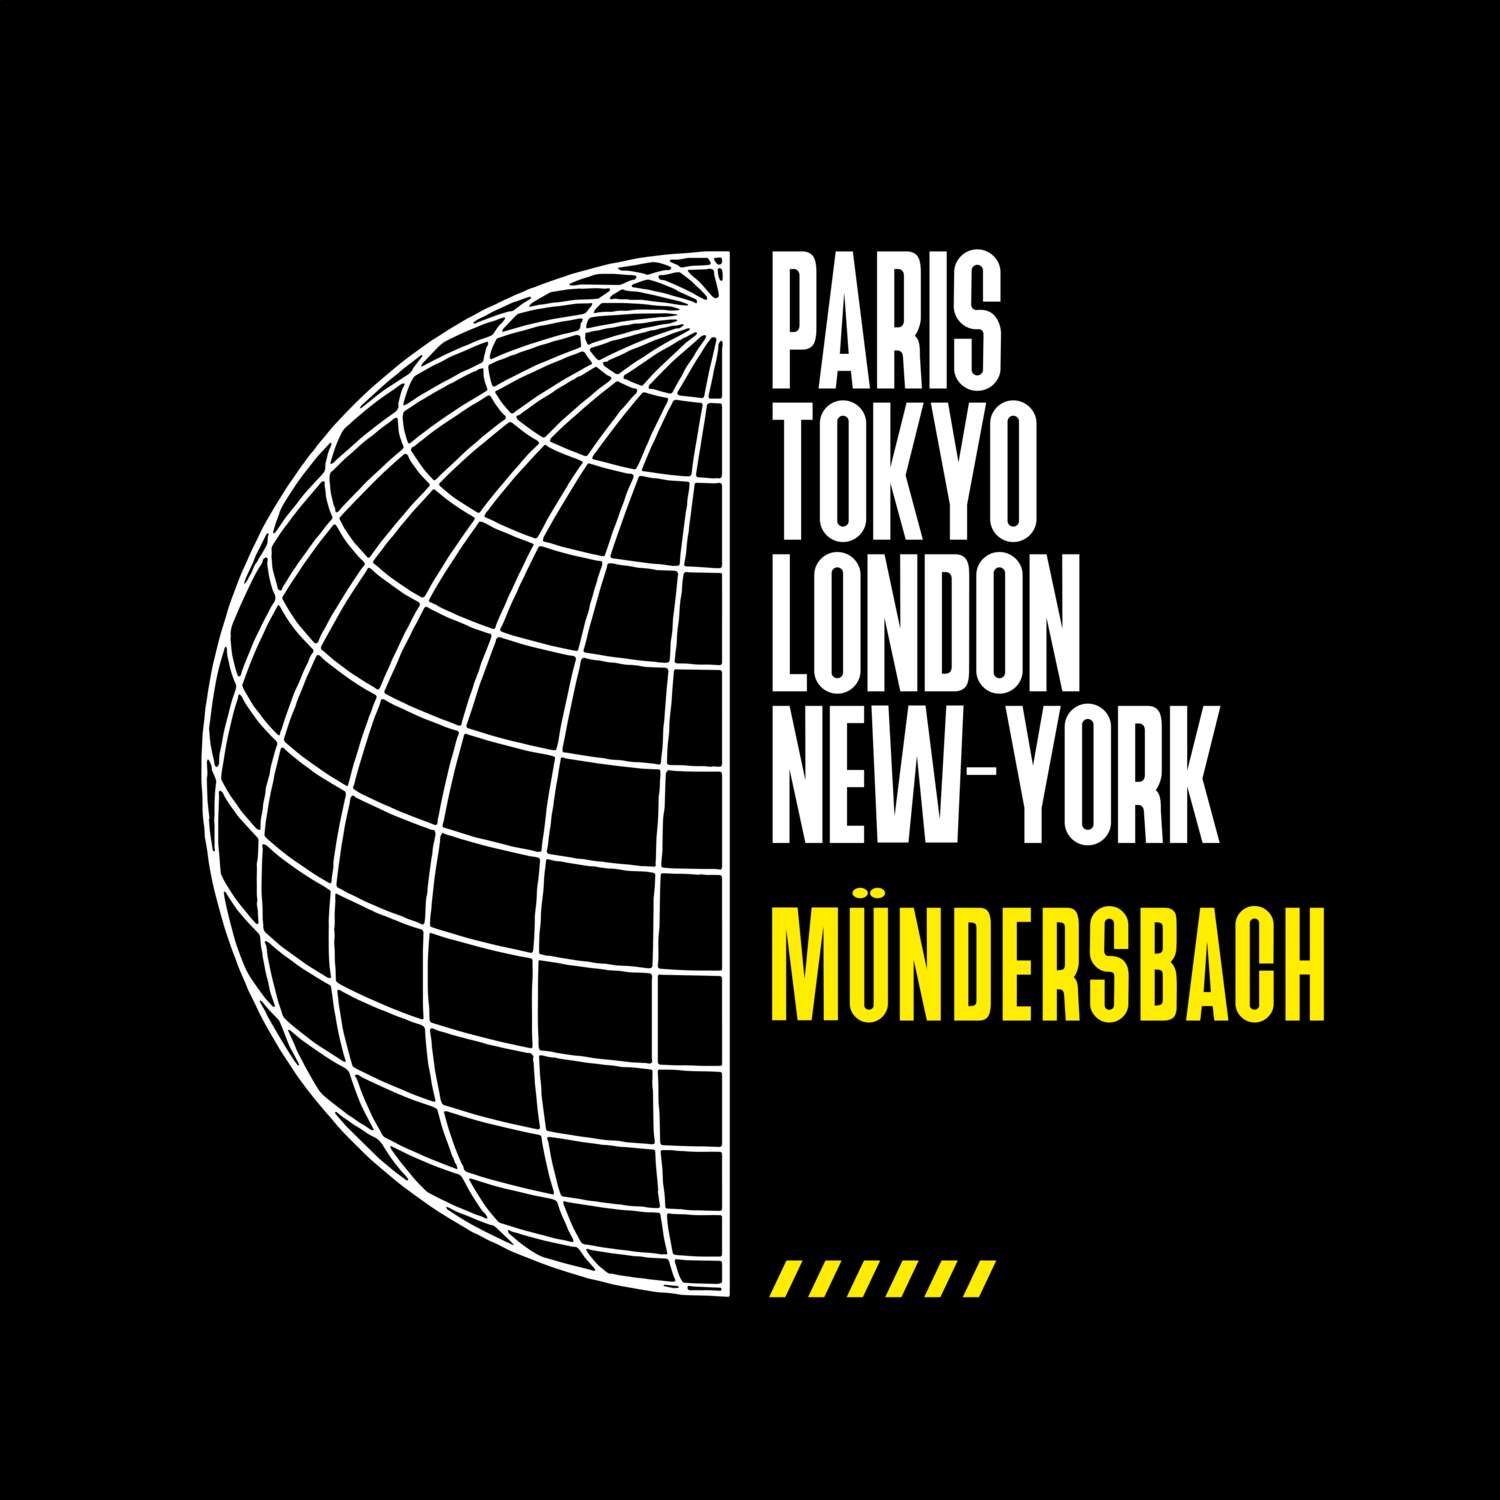 Mündersbach T-Shirt »Paris Tokyo London«